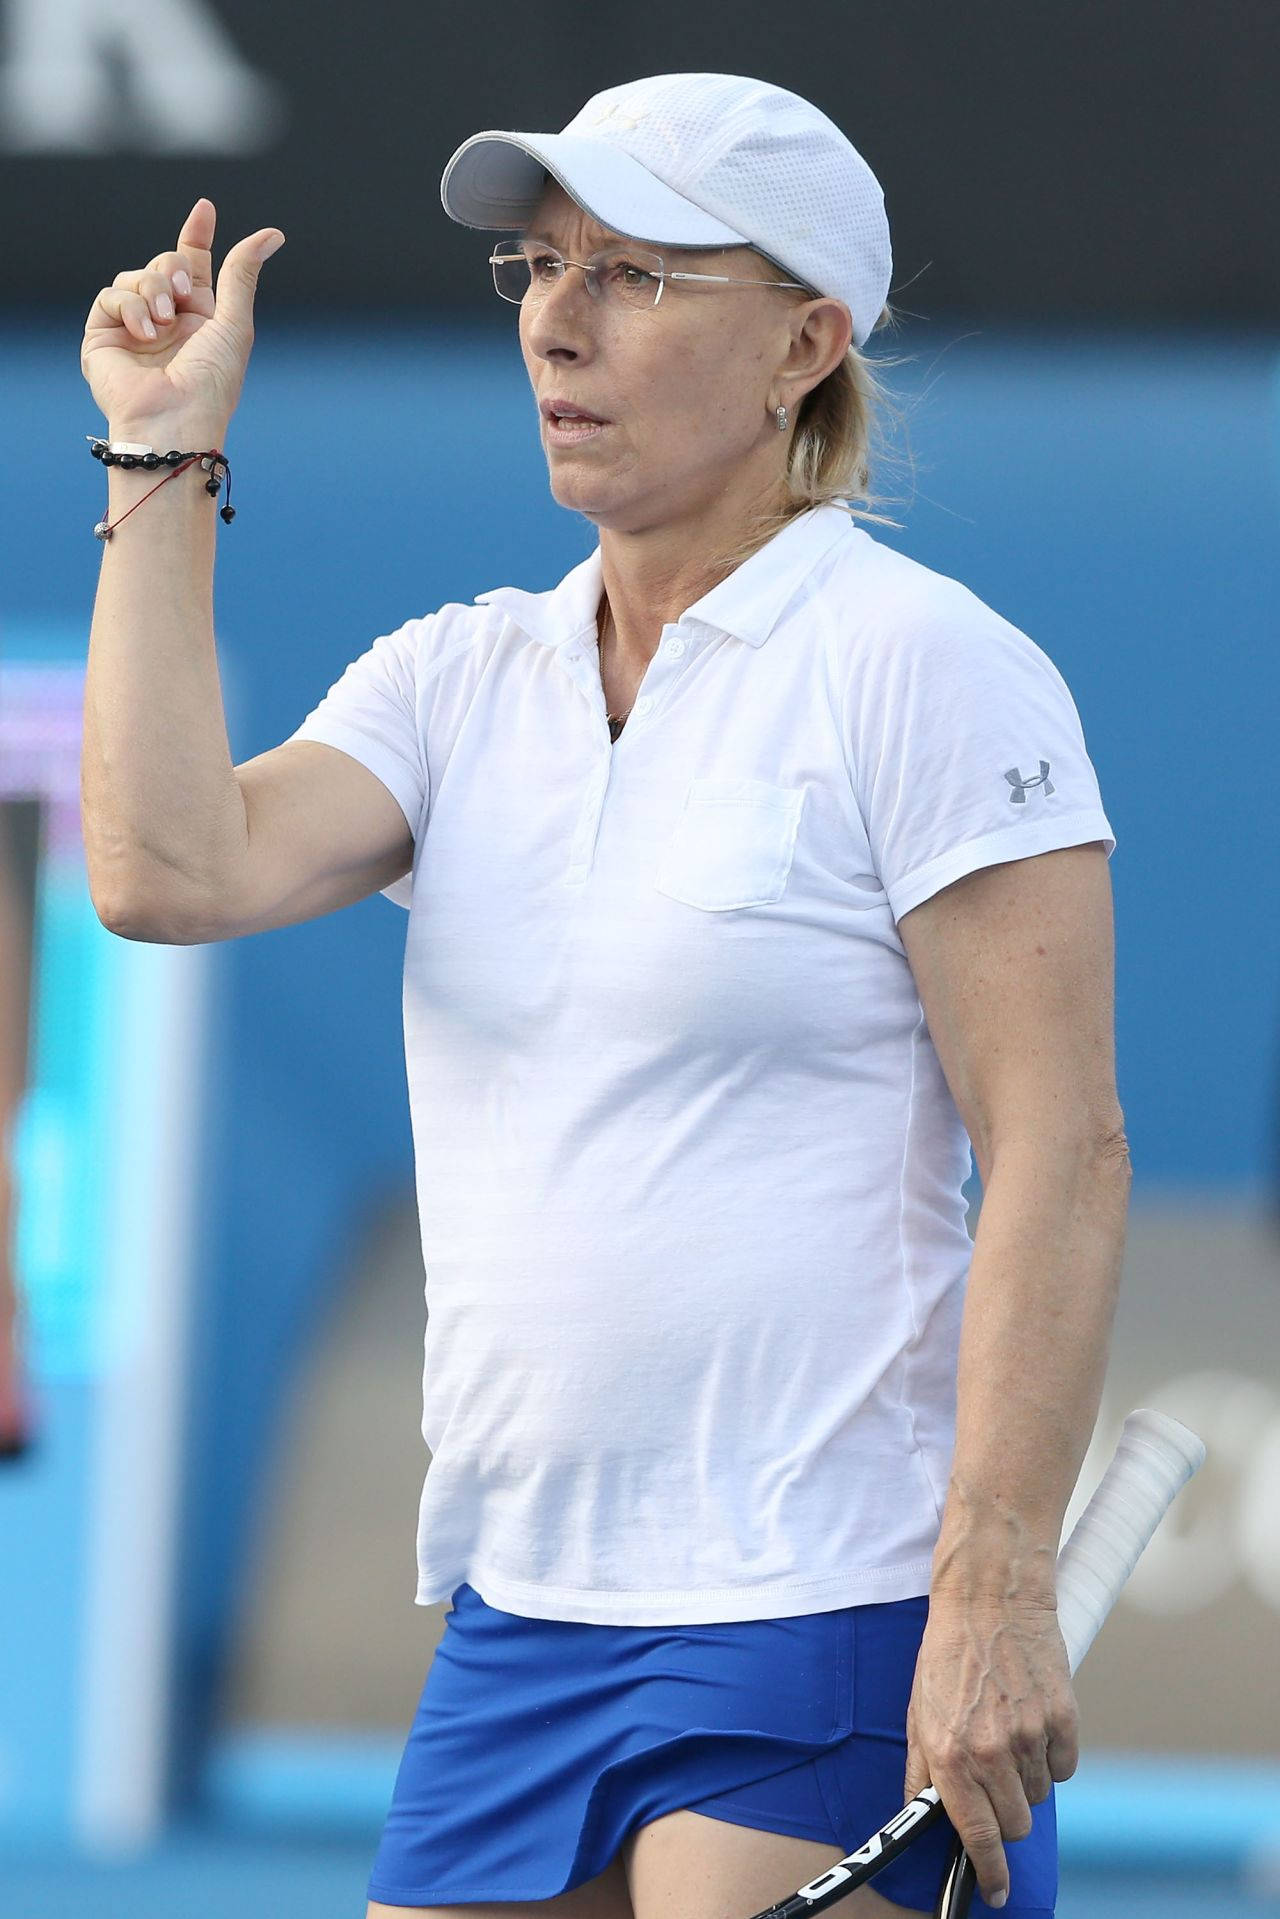 Martina Navratilova passionately gesturing during a game Wallpaper